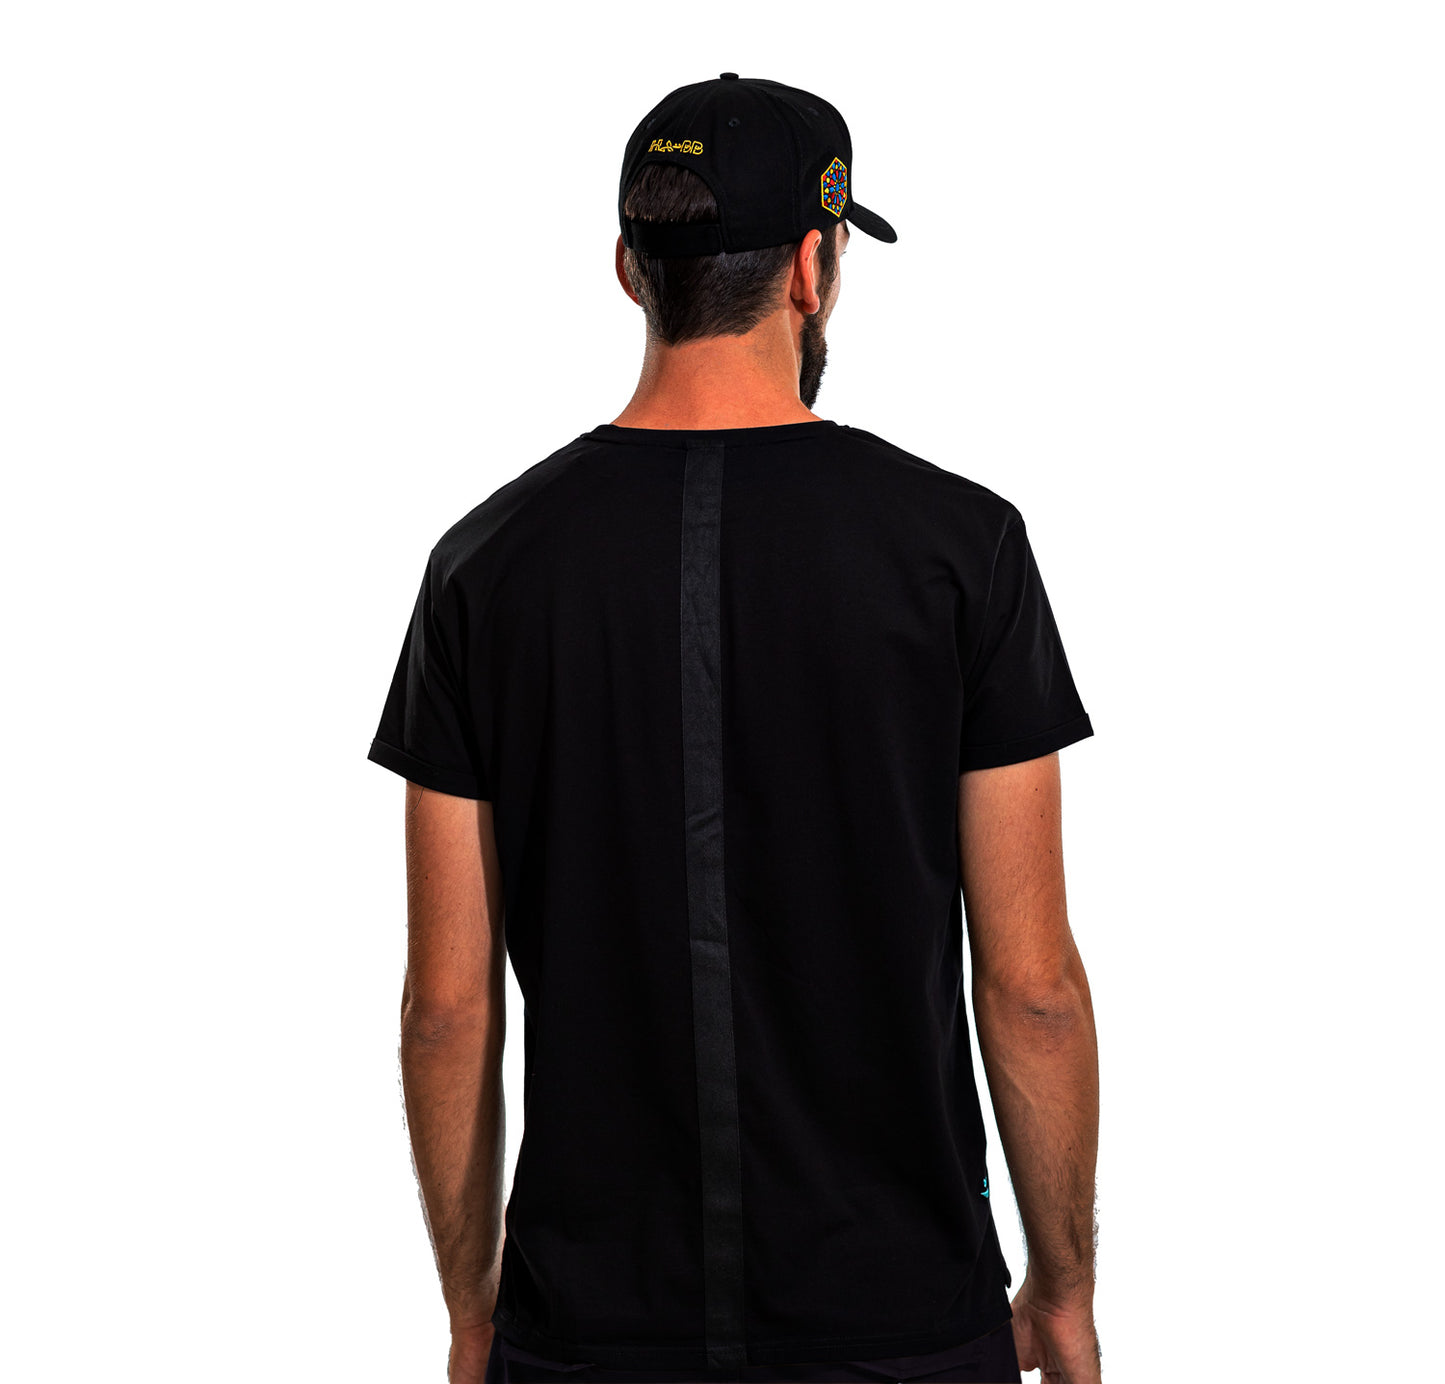 Deep black, T-shirt, shirt, man, plane tee, soft cotton, sleek, back view, Model, cap, falcon